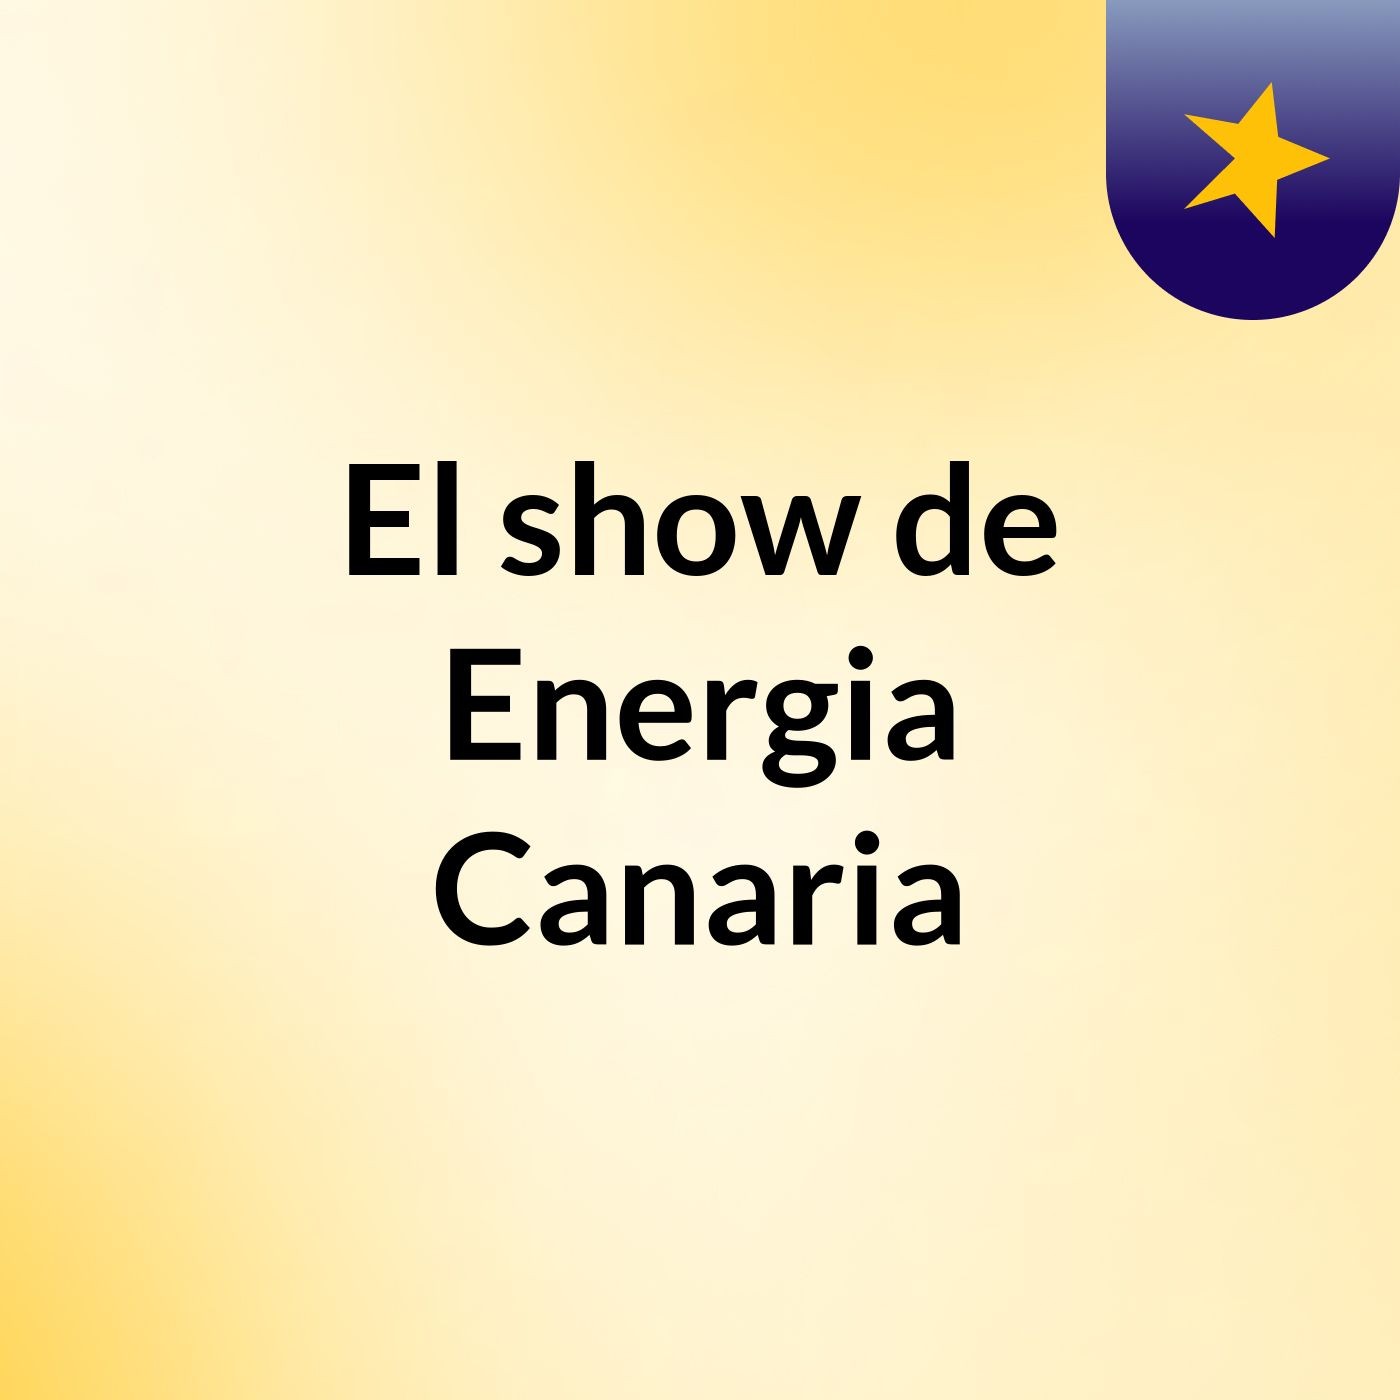 El show de Energia Canaria